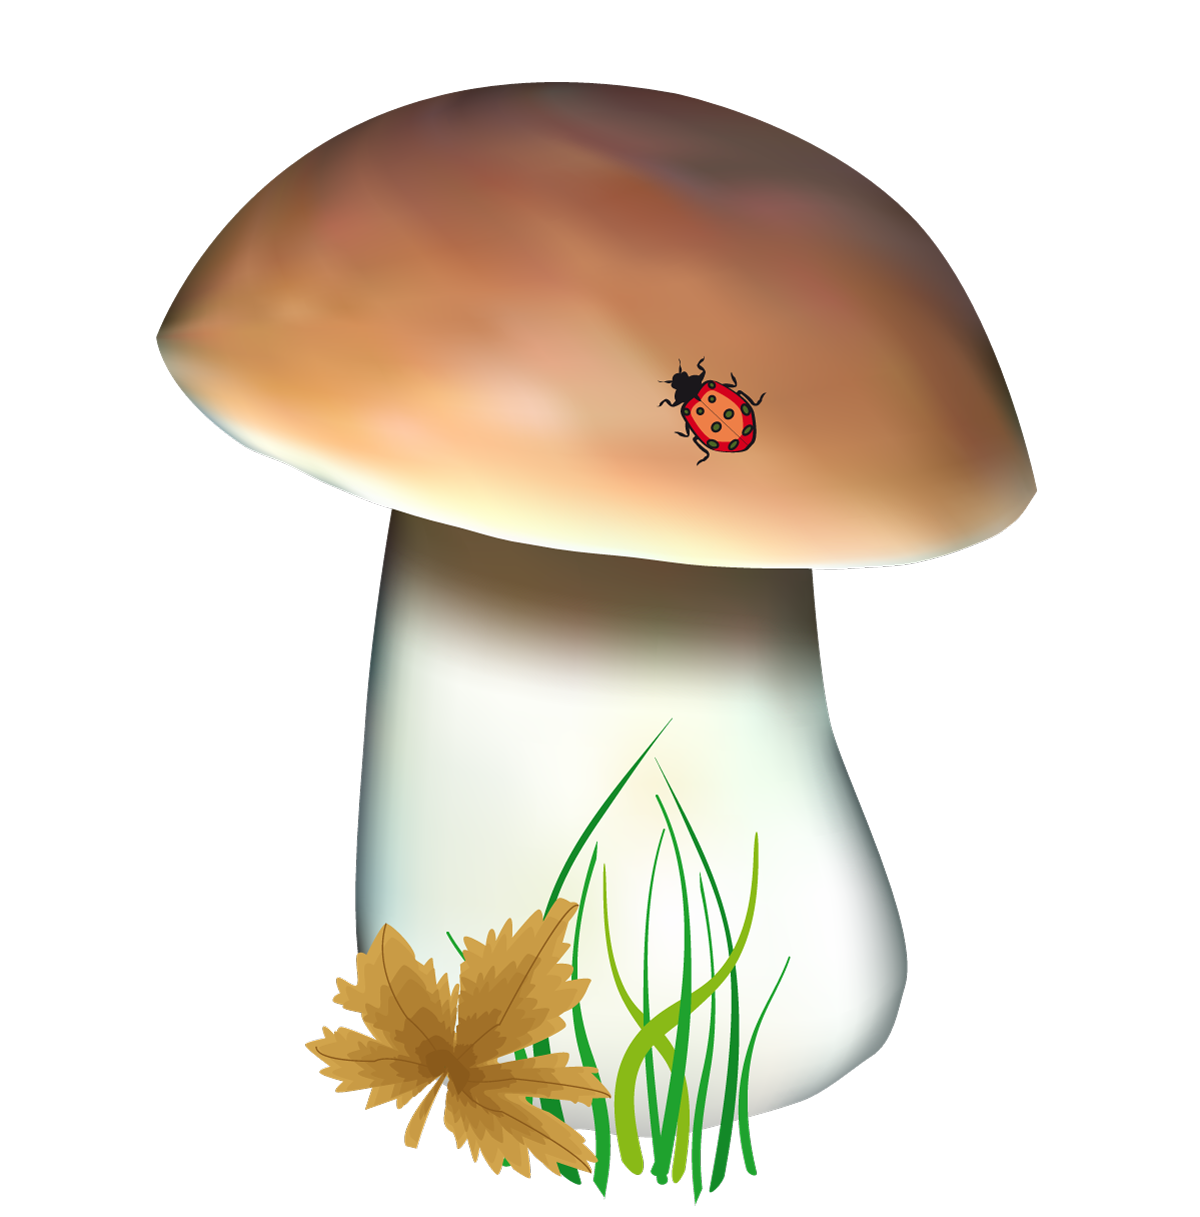 mushroom clipart realistic